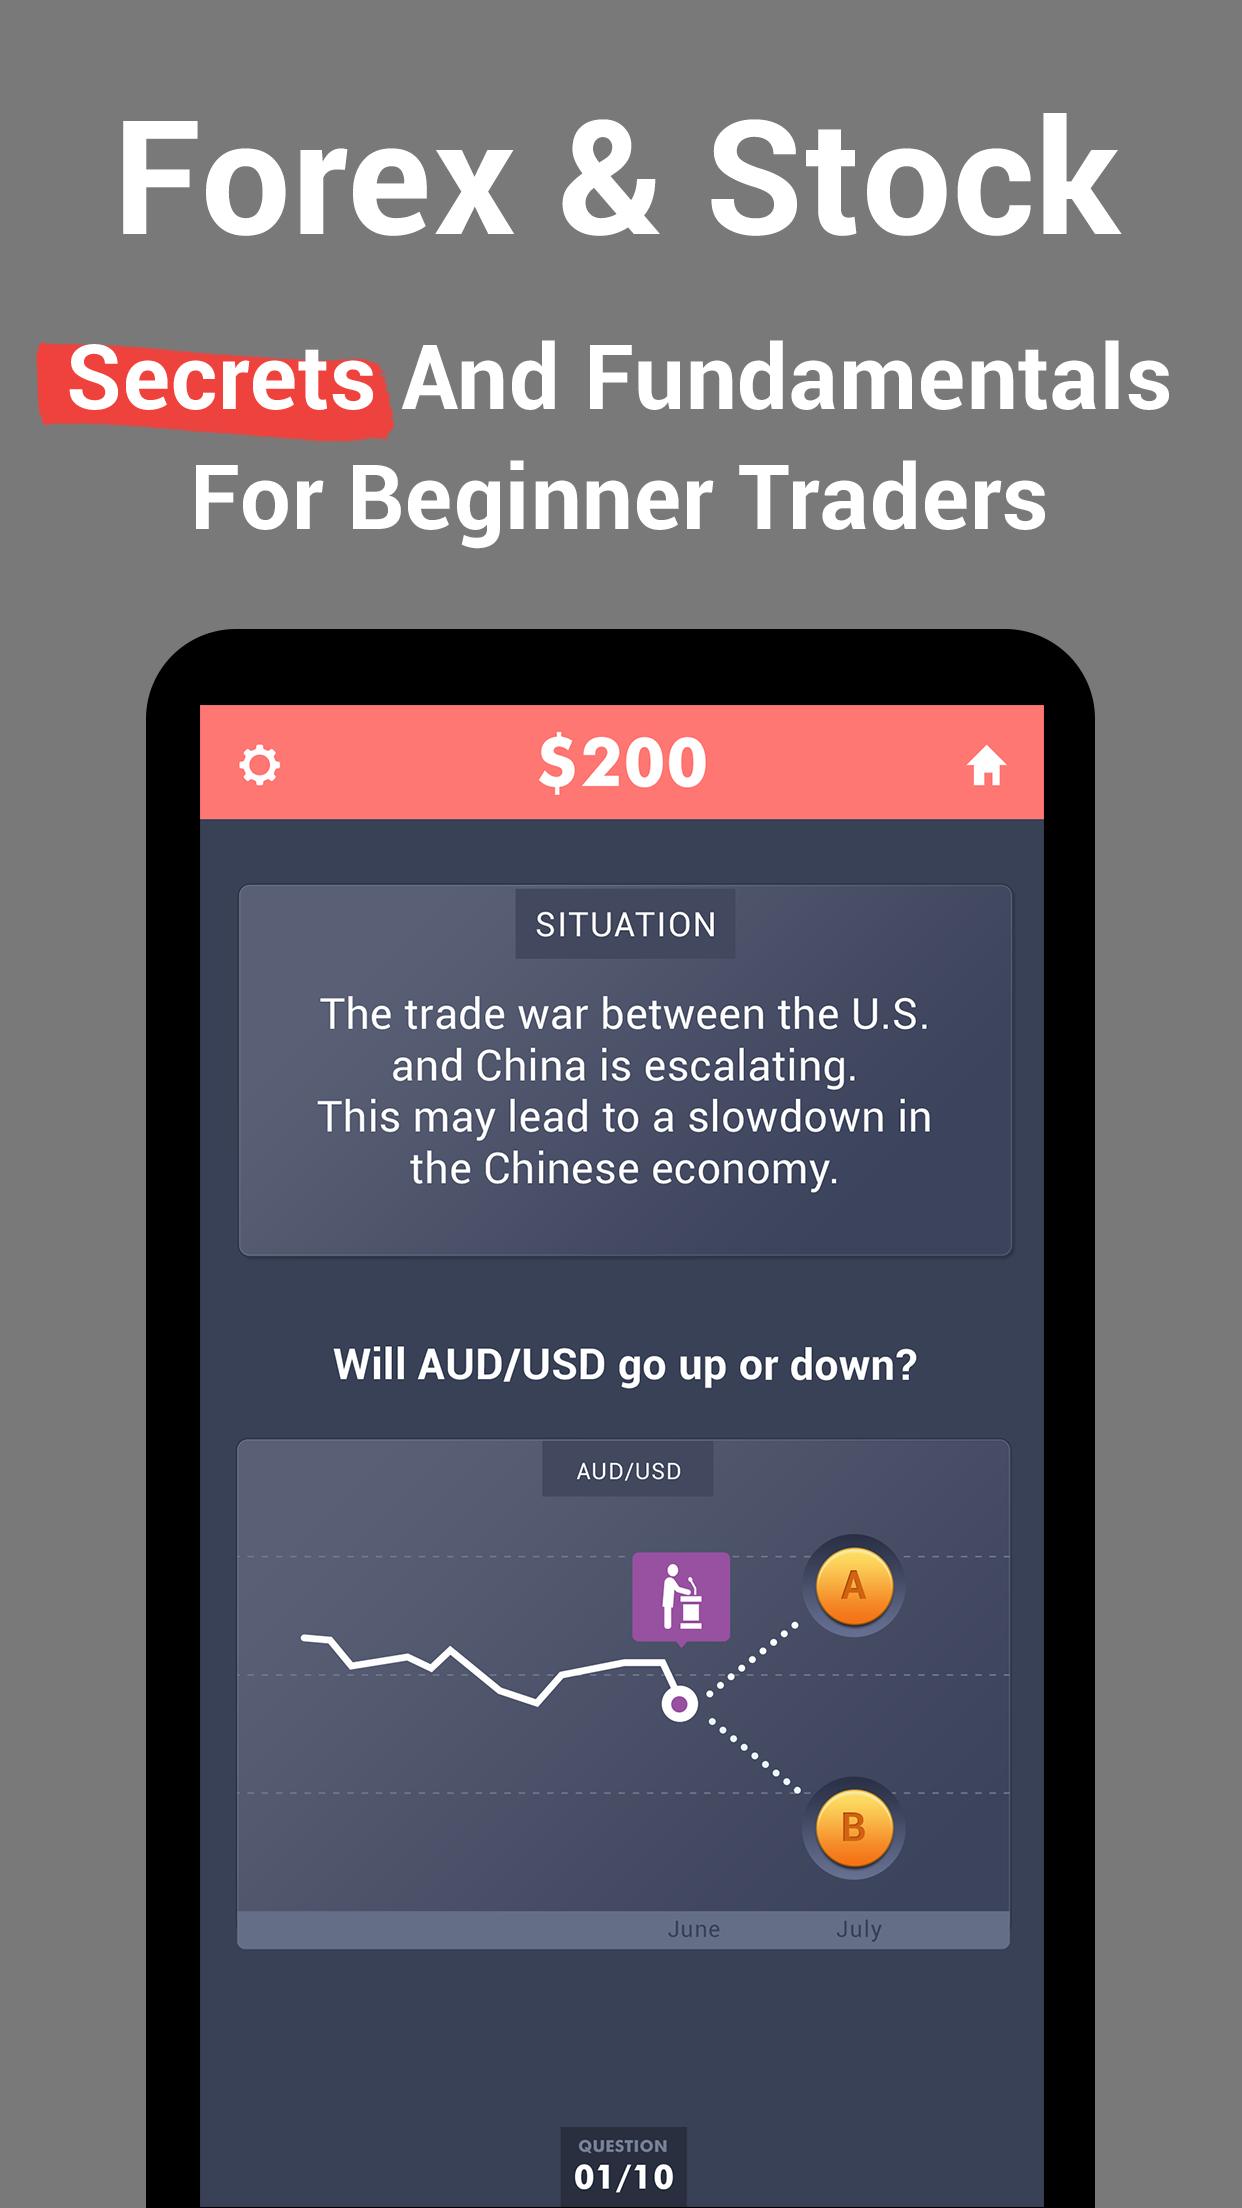 forex game - online stocks trading for beginners